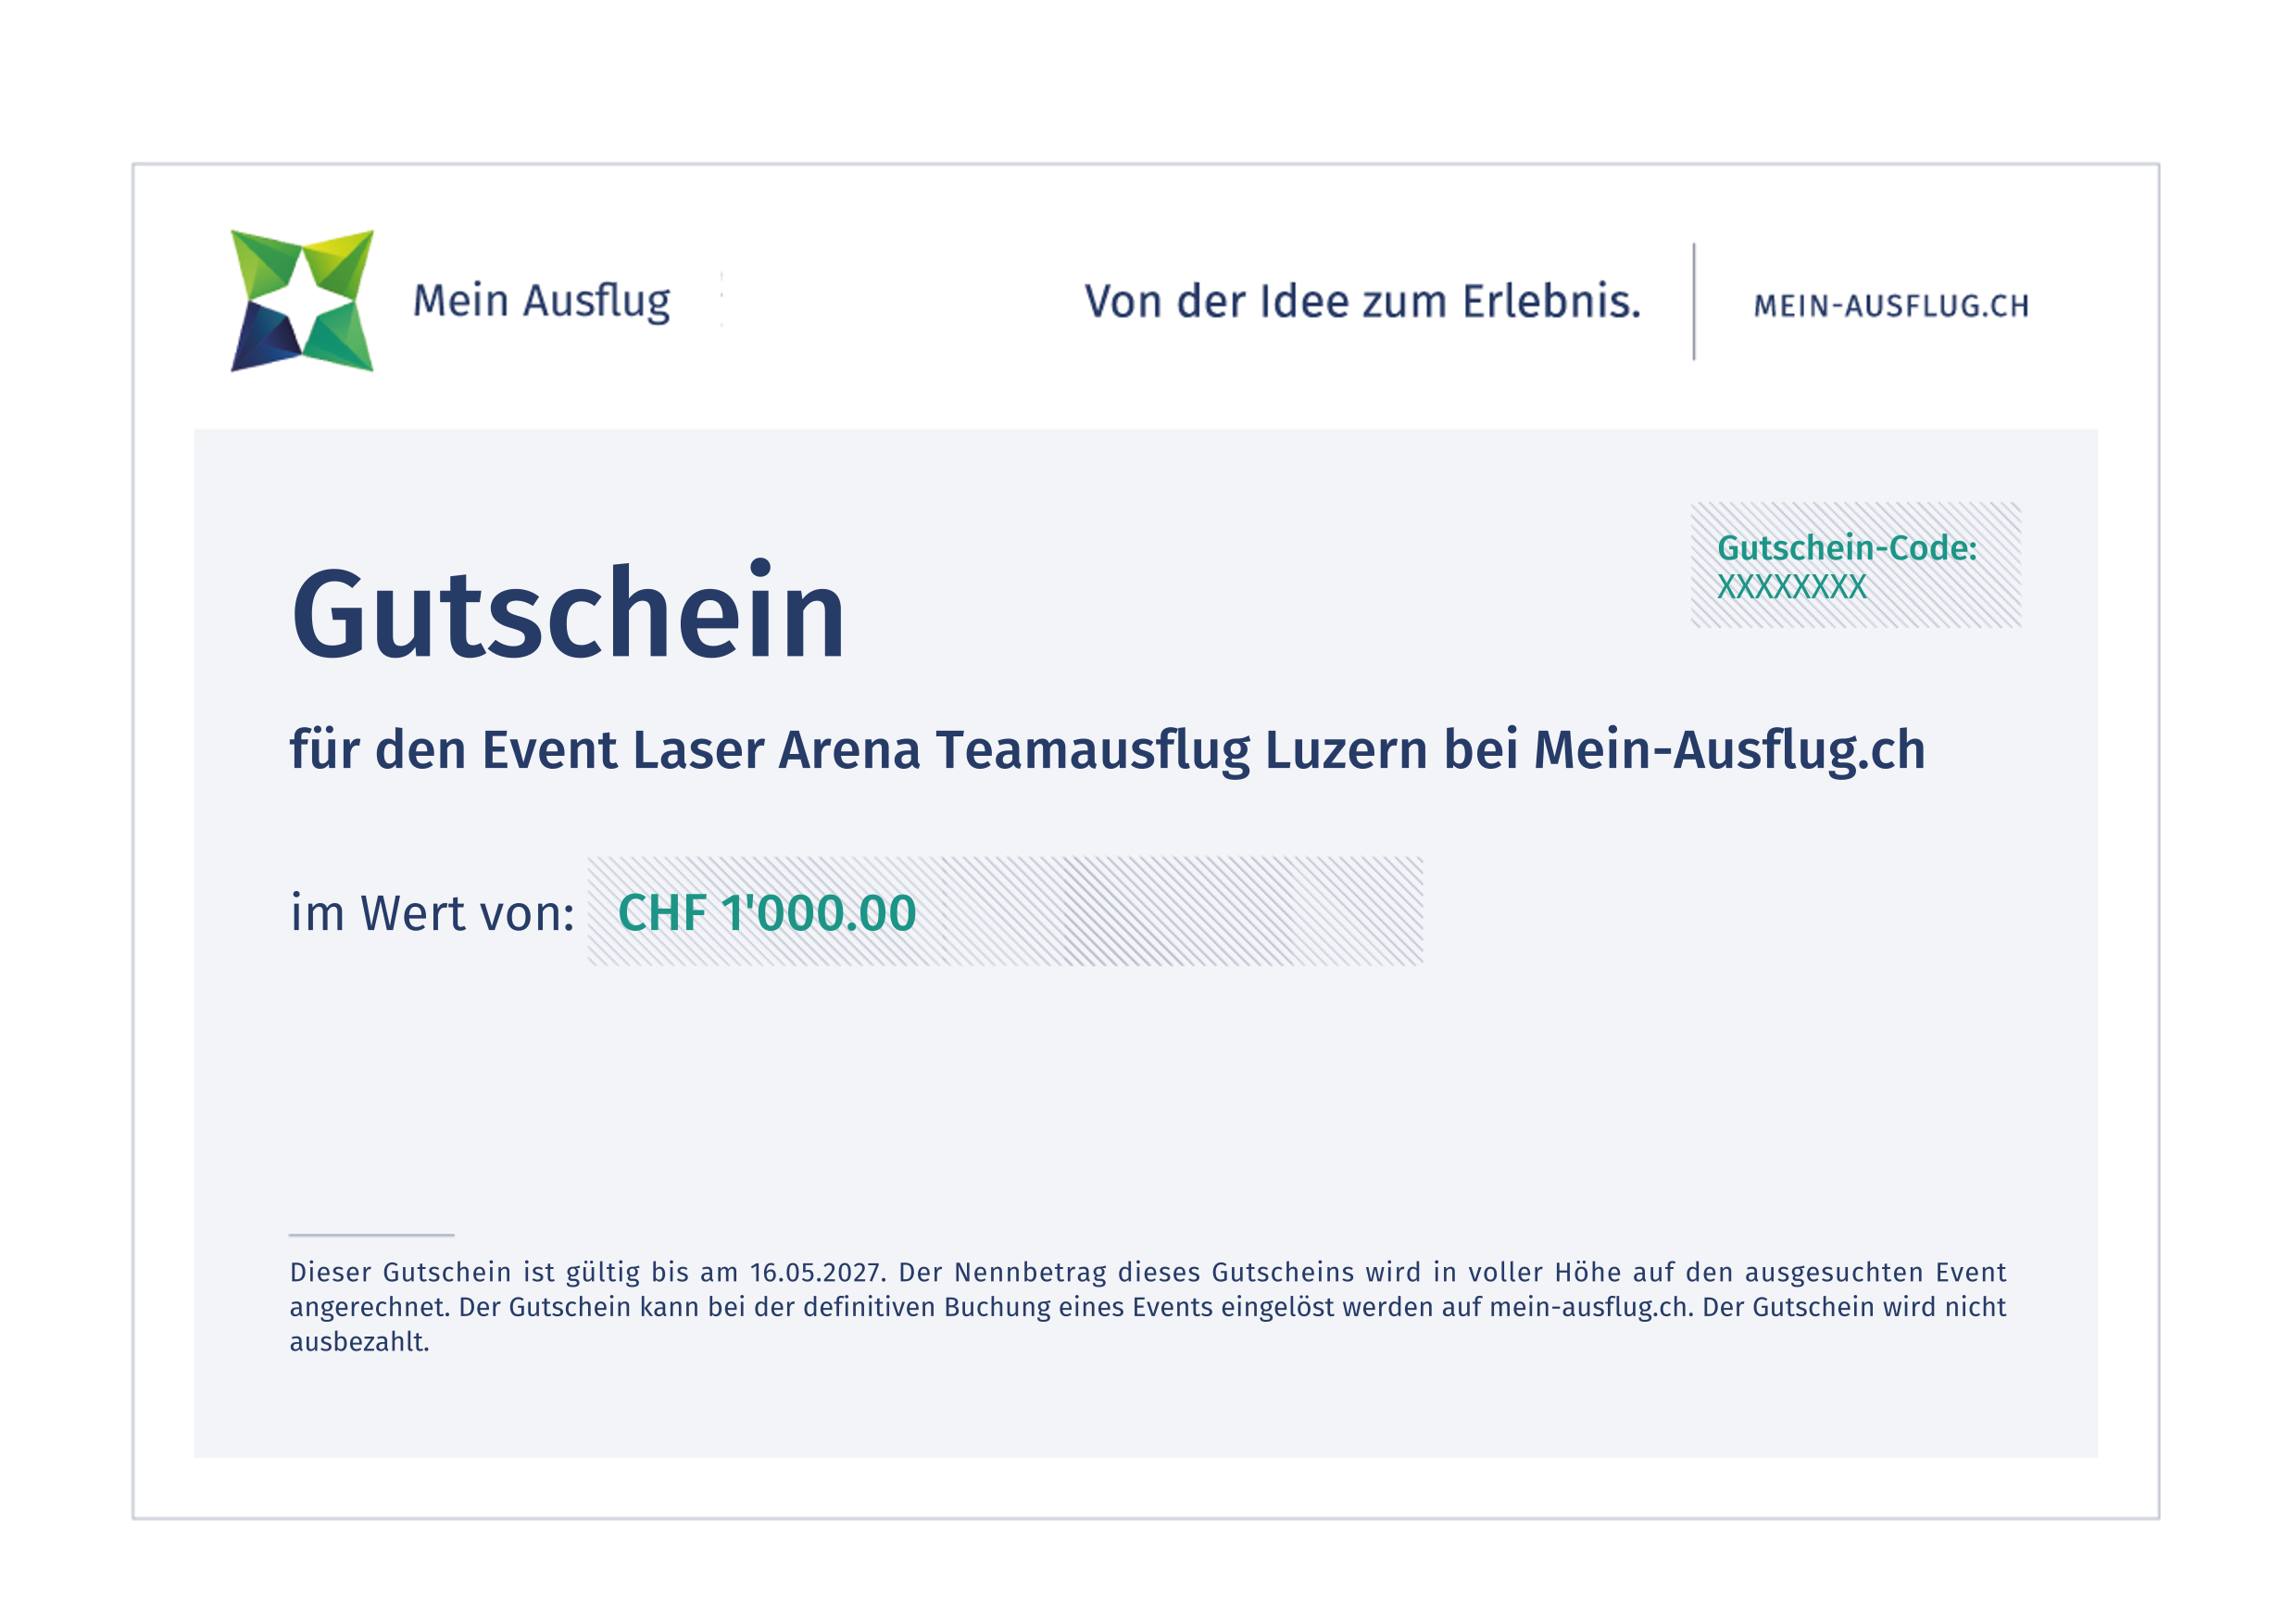 Laser Arena Teamausflug Luzern